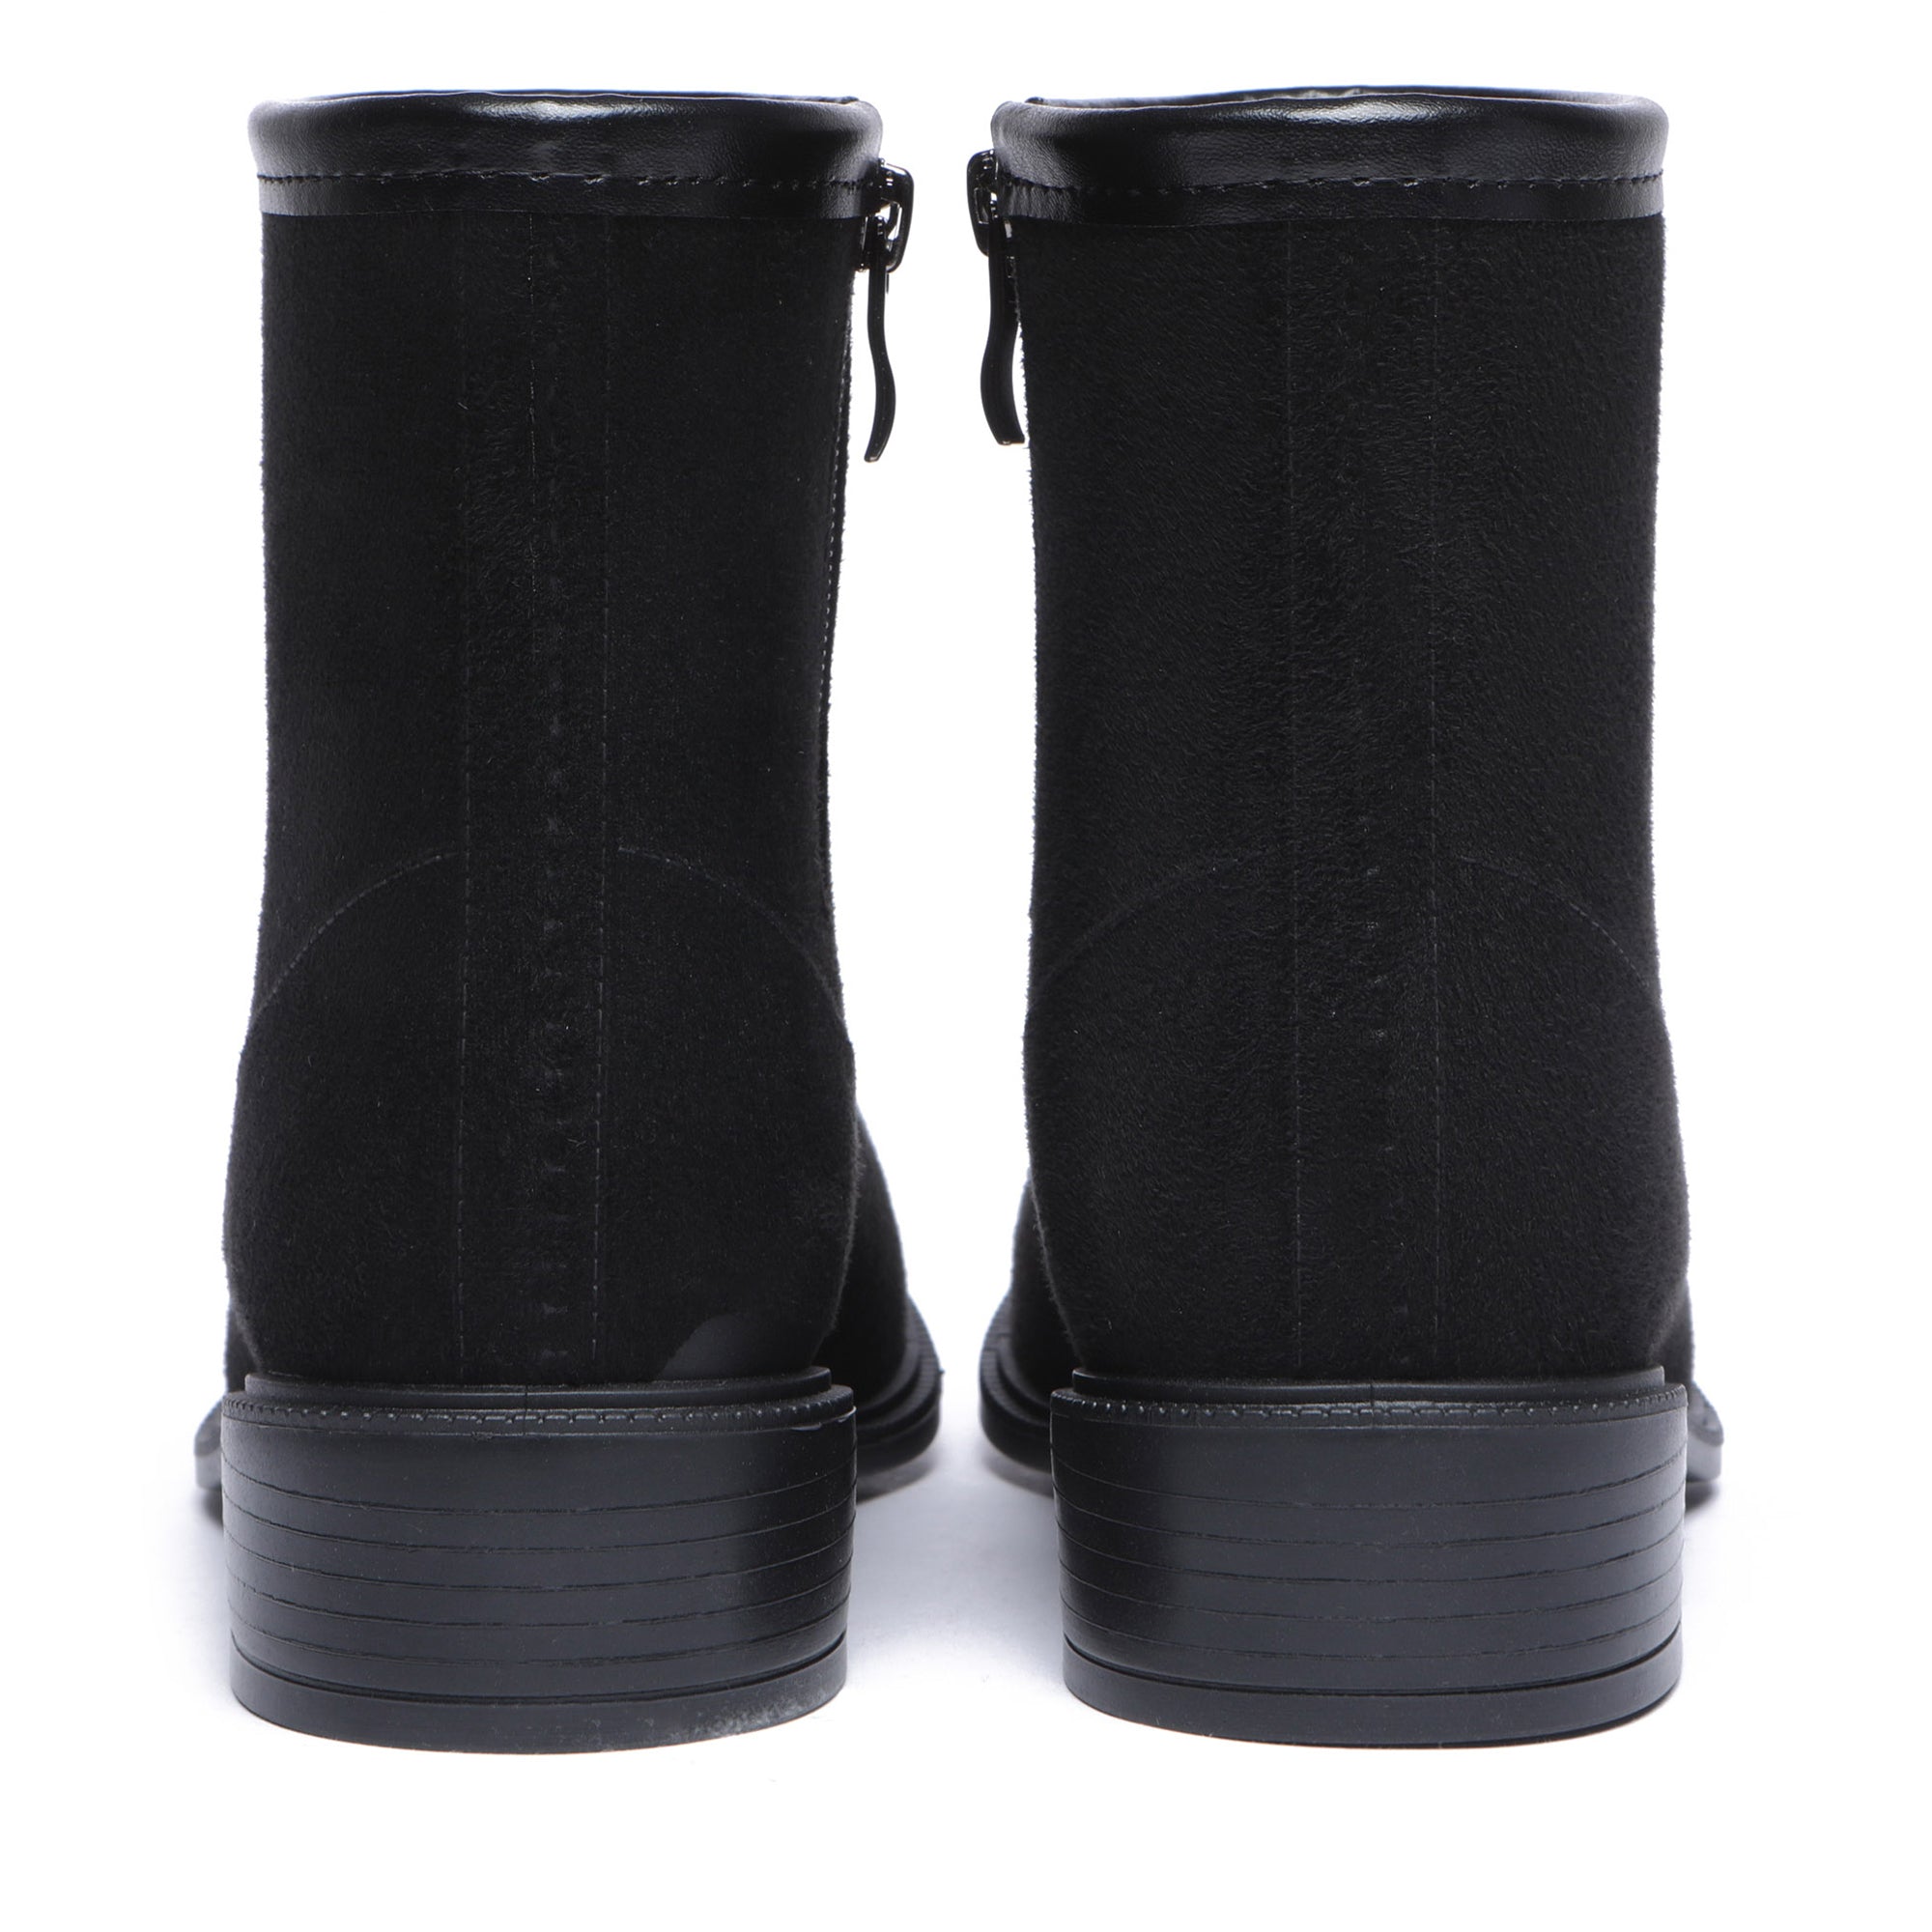 UGG Vania Fashion Rain Boots